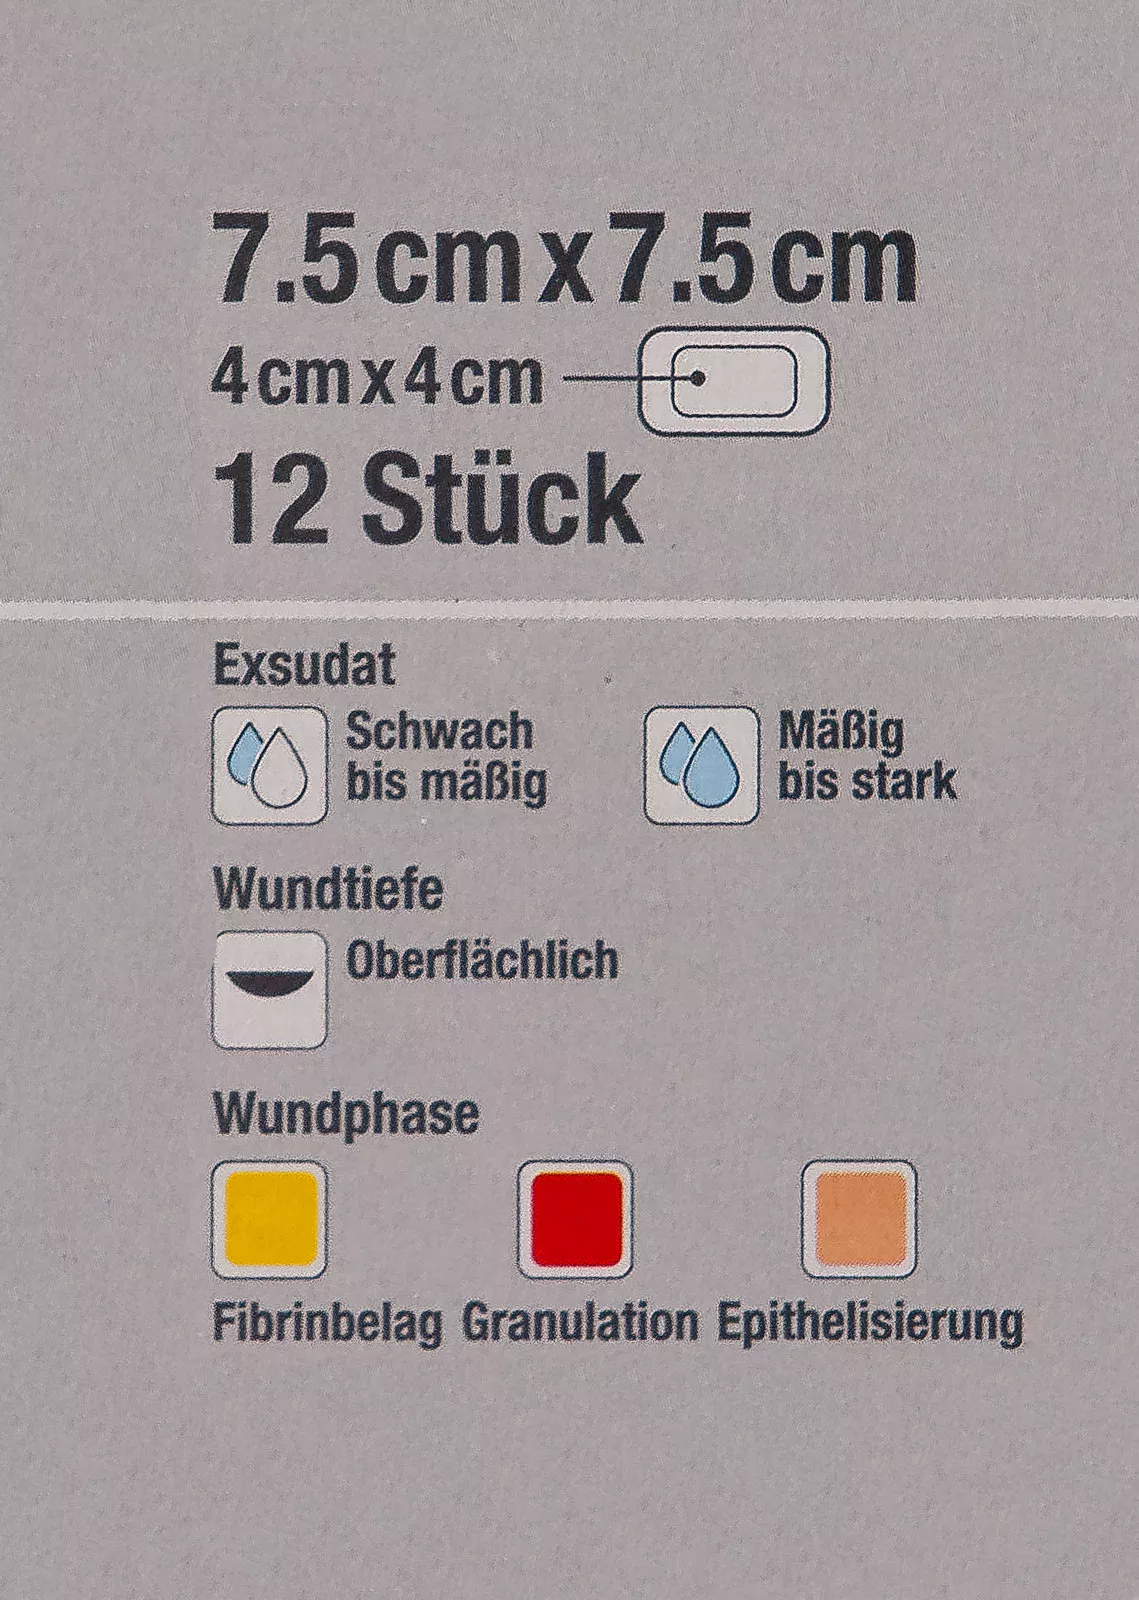 CUTIMED Siltec B Schaumverband 7.5x7.5 cm mit Haftrand,12 Stück